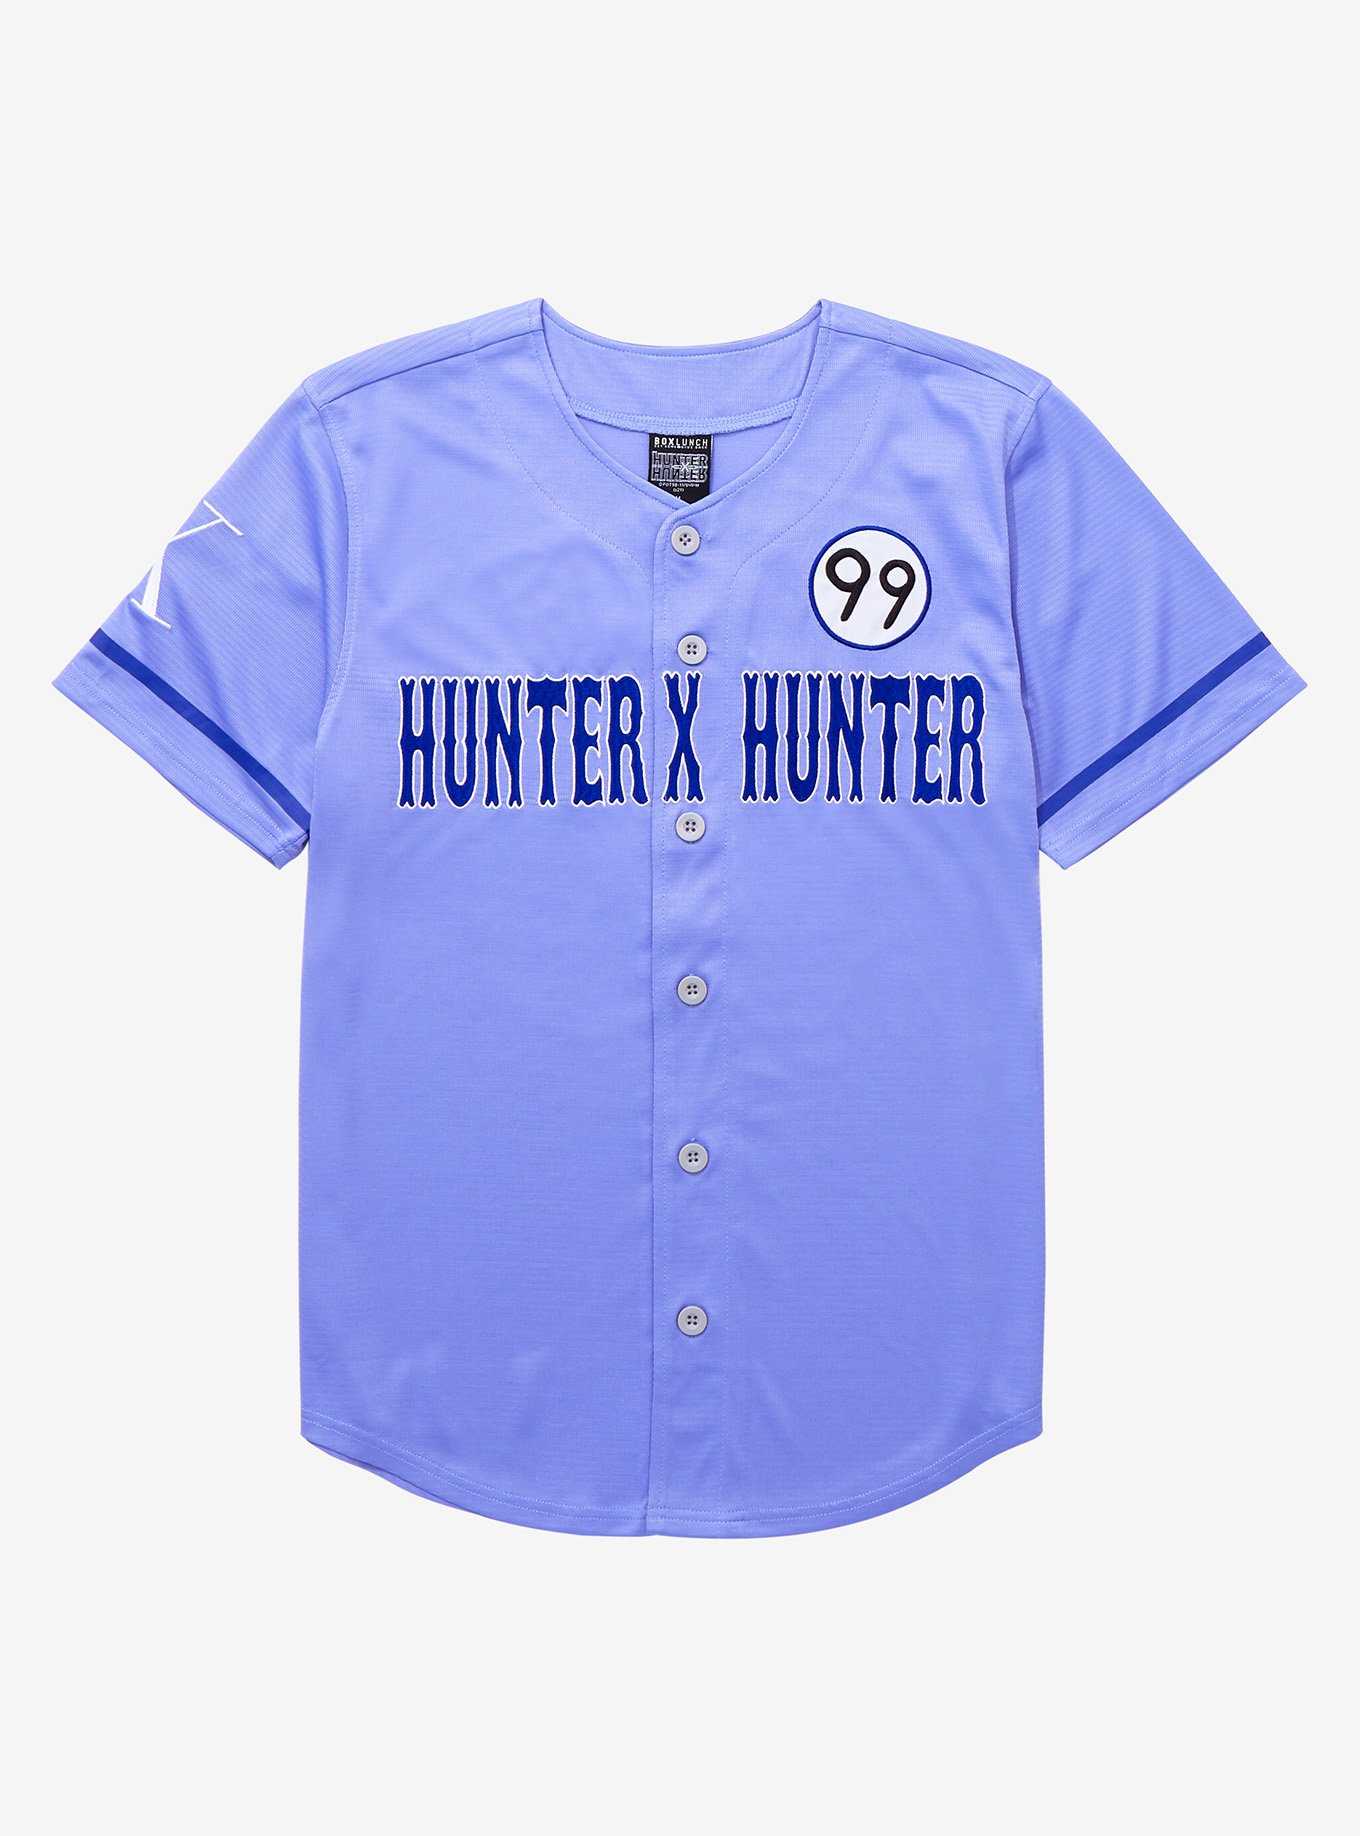 Hunter x Hunter Killua Zoldyck Baseball Jersey - BoxLunch Exclusive, , hi-res